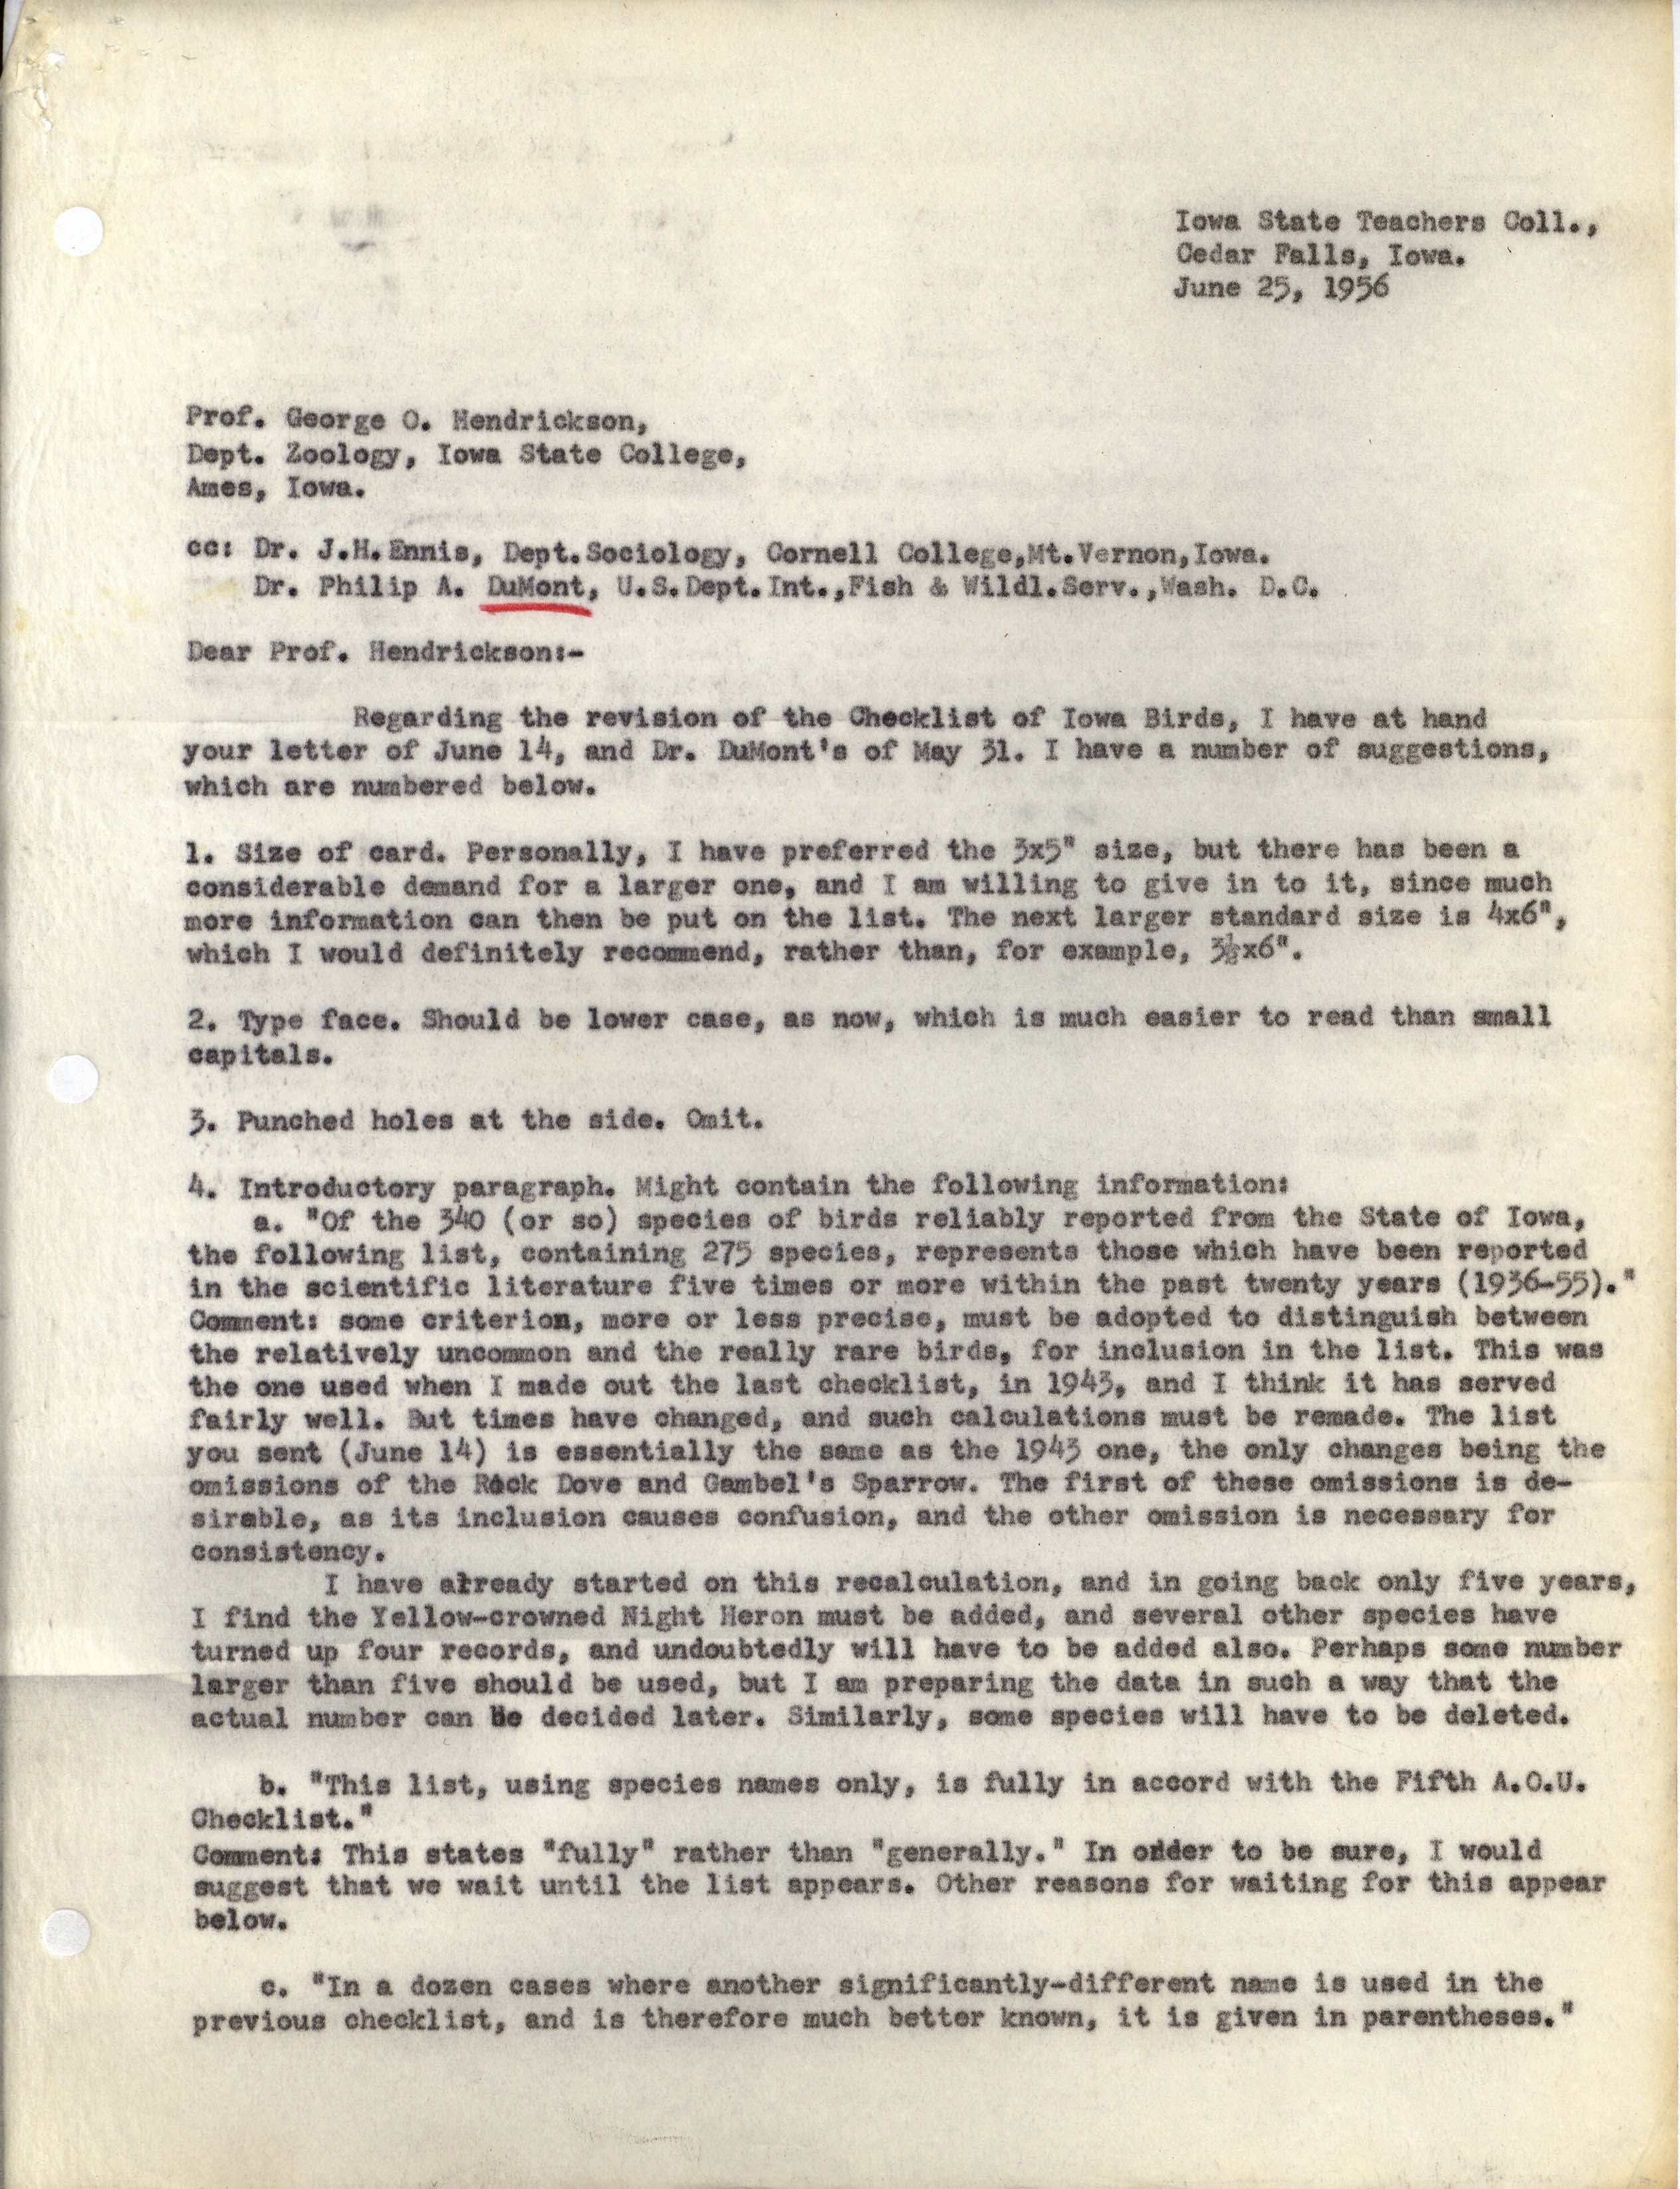 Martin Grant letter to George Hendrickson regarding Checklist of Iowa Birds, June 25, 1956